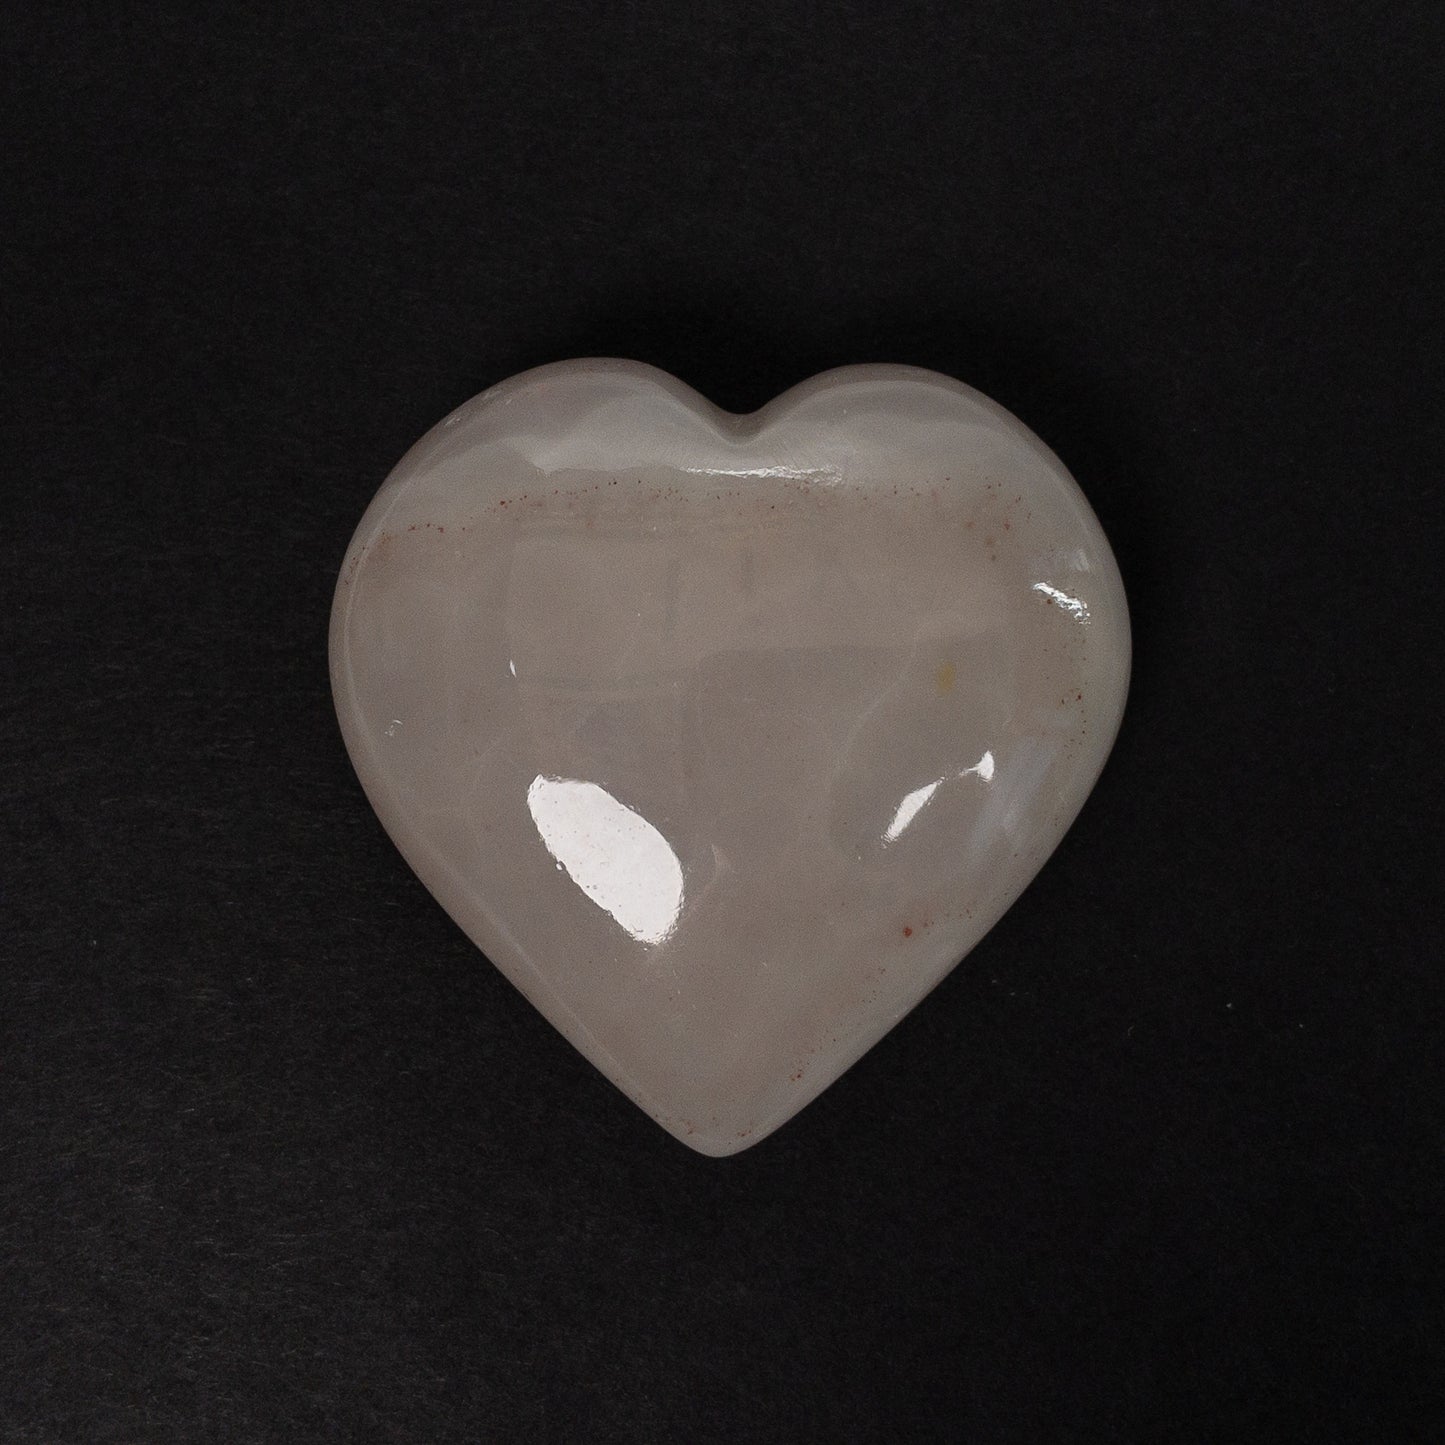 Calcite Large Smooth Heart Palm Stone Specimen - 1 pc.